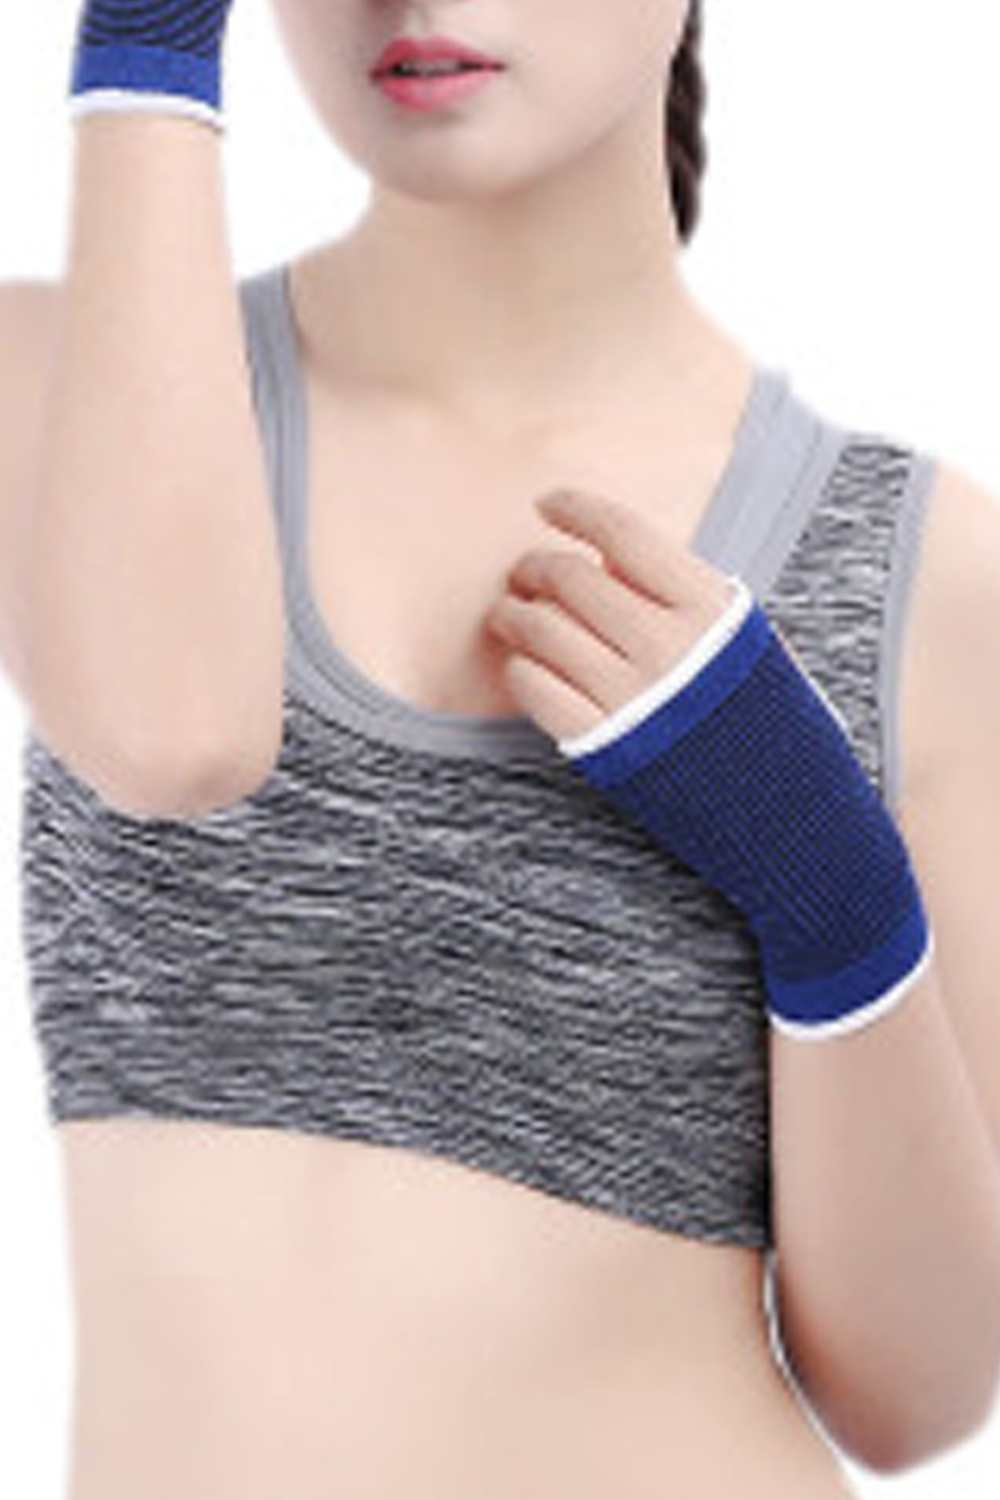 Zumeet Fitness Comfortable High End Palm Wrist Half Finger Protection Guard